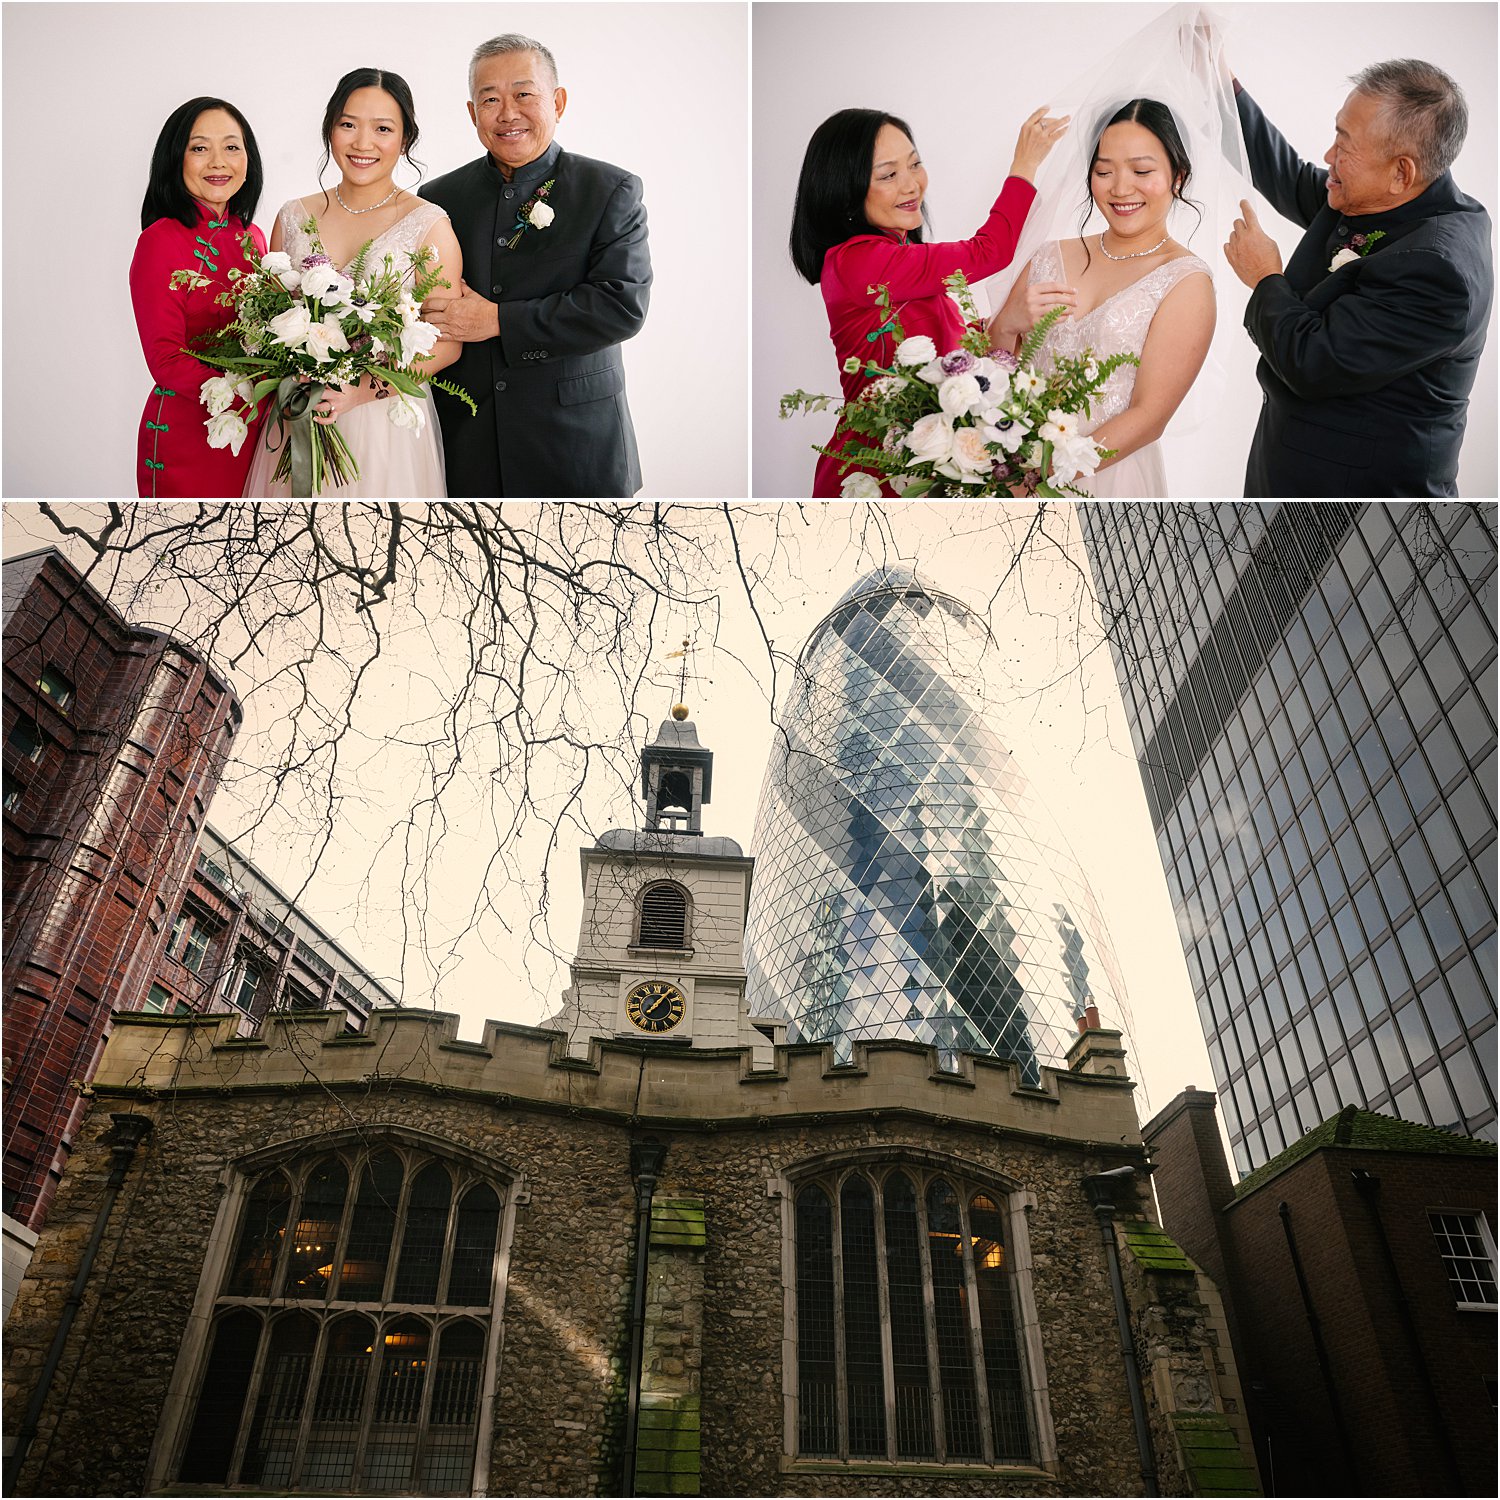 london-wedding-tower-bridge-dickens-inn-yunni-josh-lily-sawyer-photo